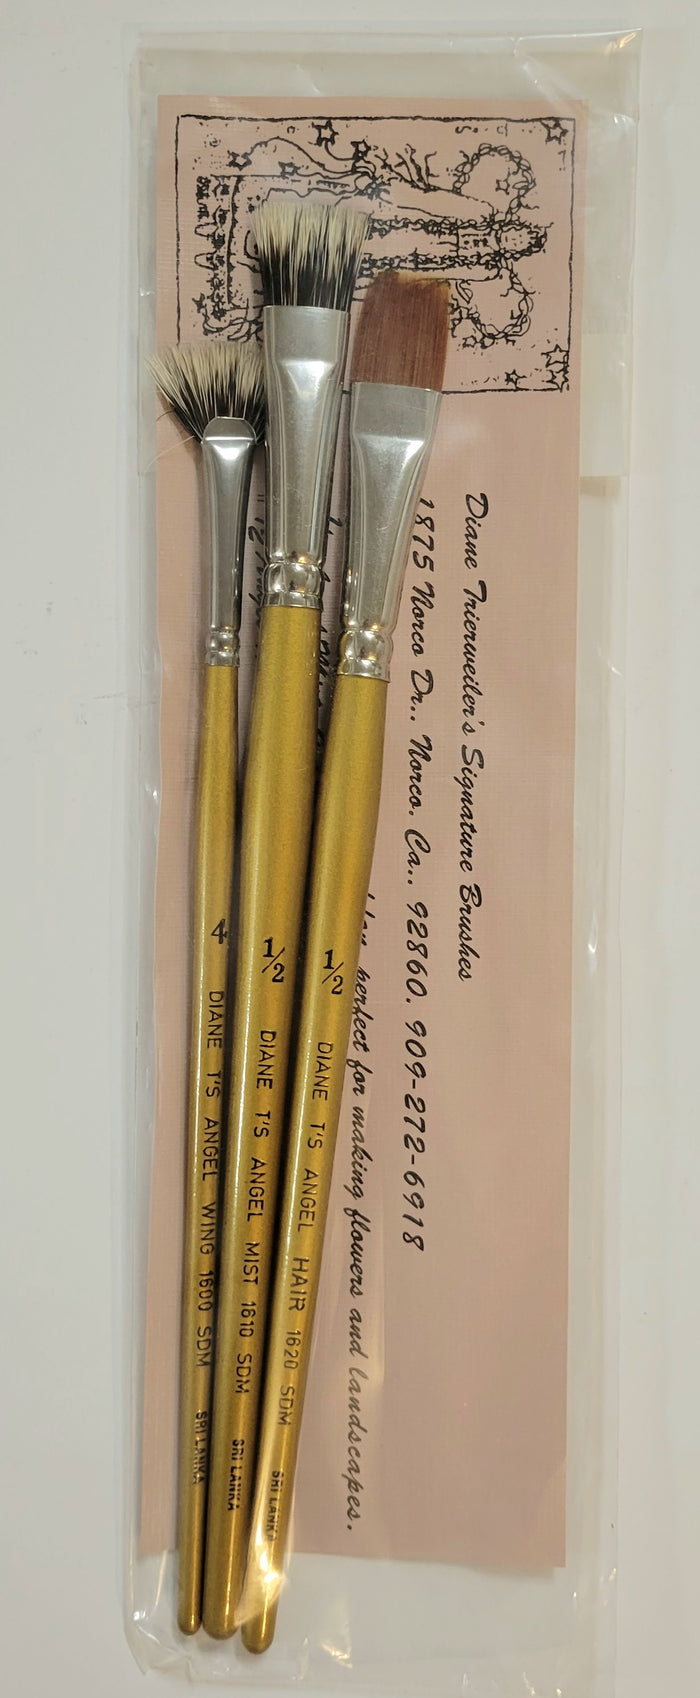 Diane Trierweiler's Signature Brushes, Angel Series Foliage Set